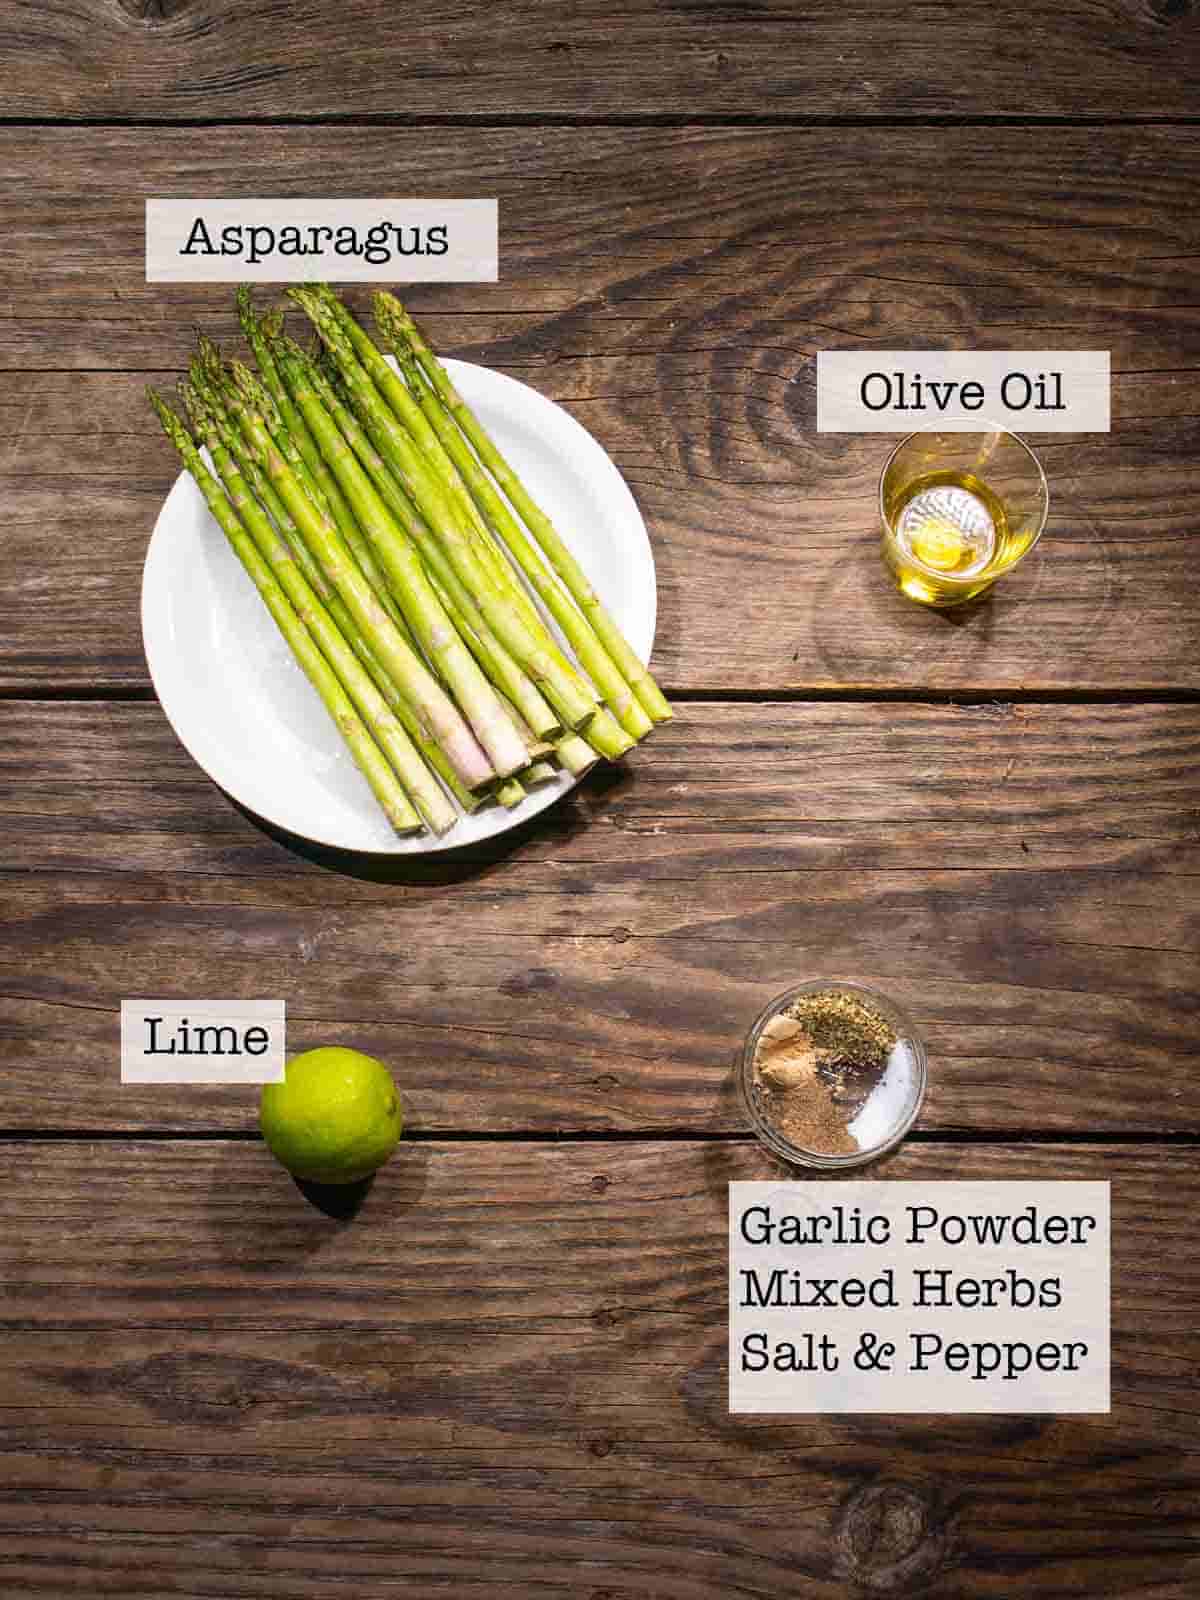 ingredients for grilled asparagus in foil